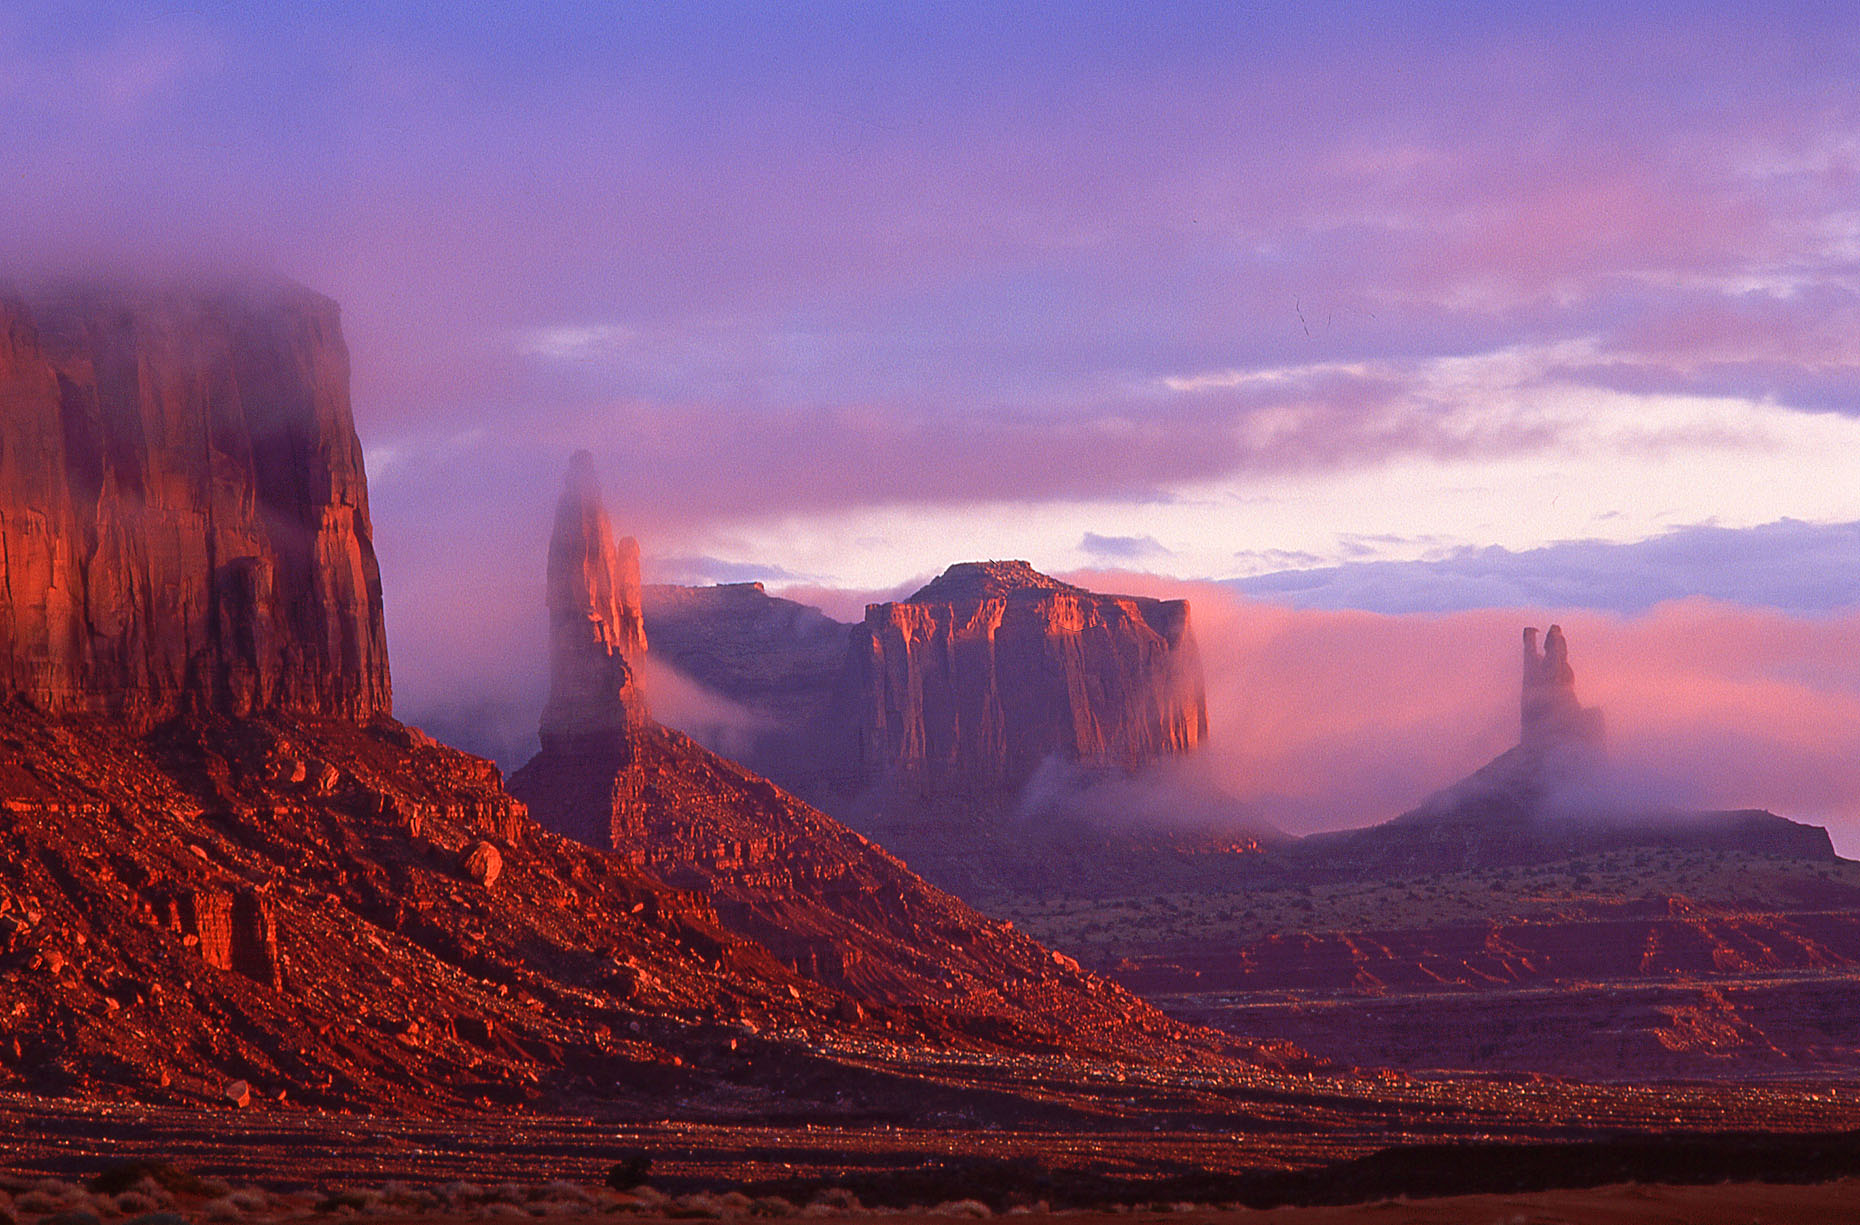 Ground fog sunrise, John Annerino. Monument Valley Navajo Tribal Park, Utah-Arizona